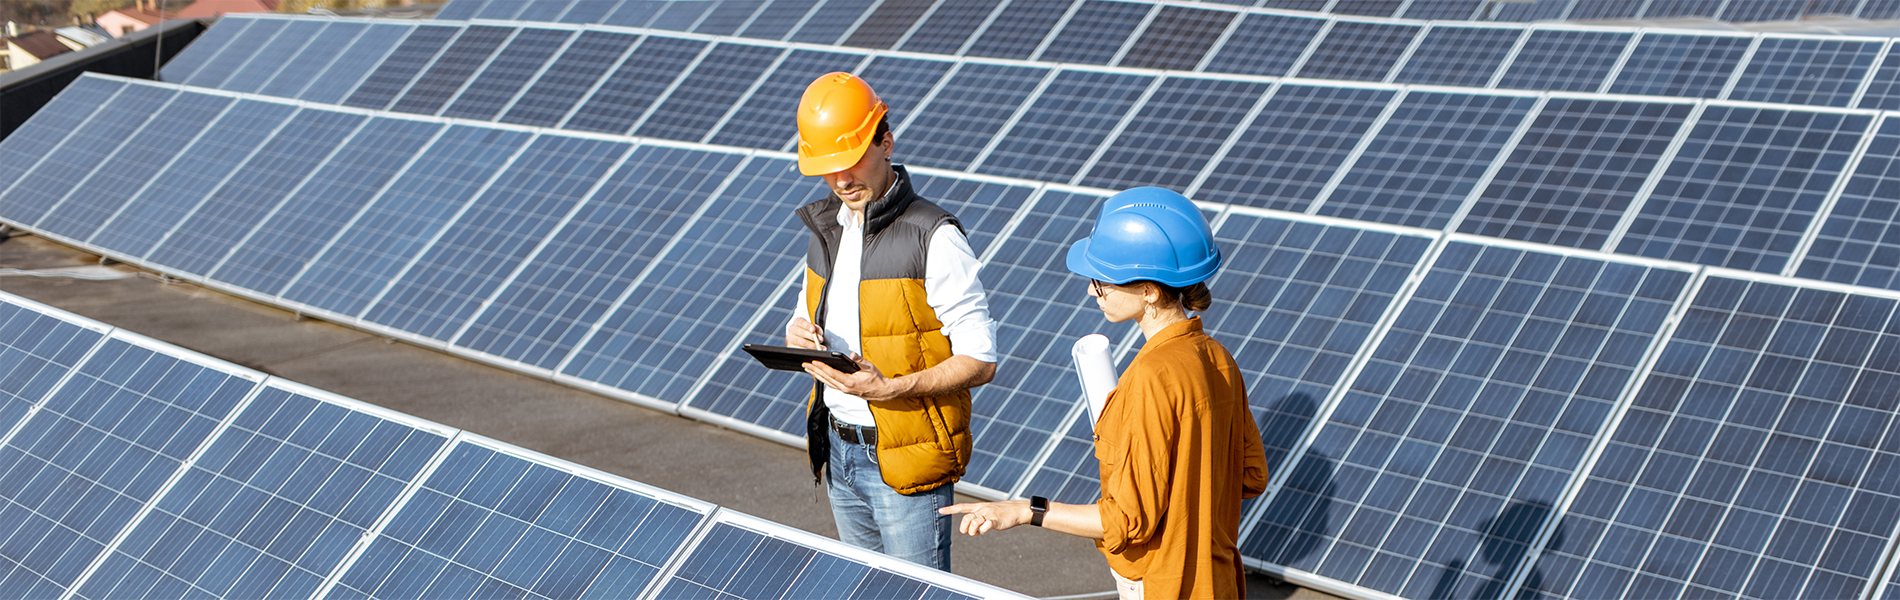 Solar Installation Training banner image